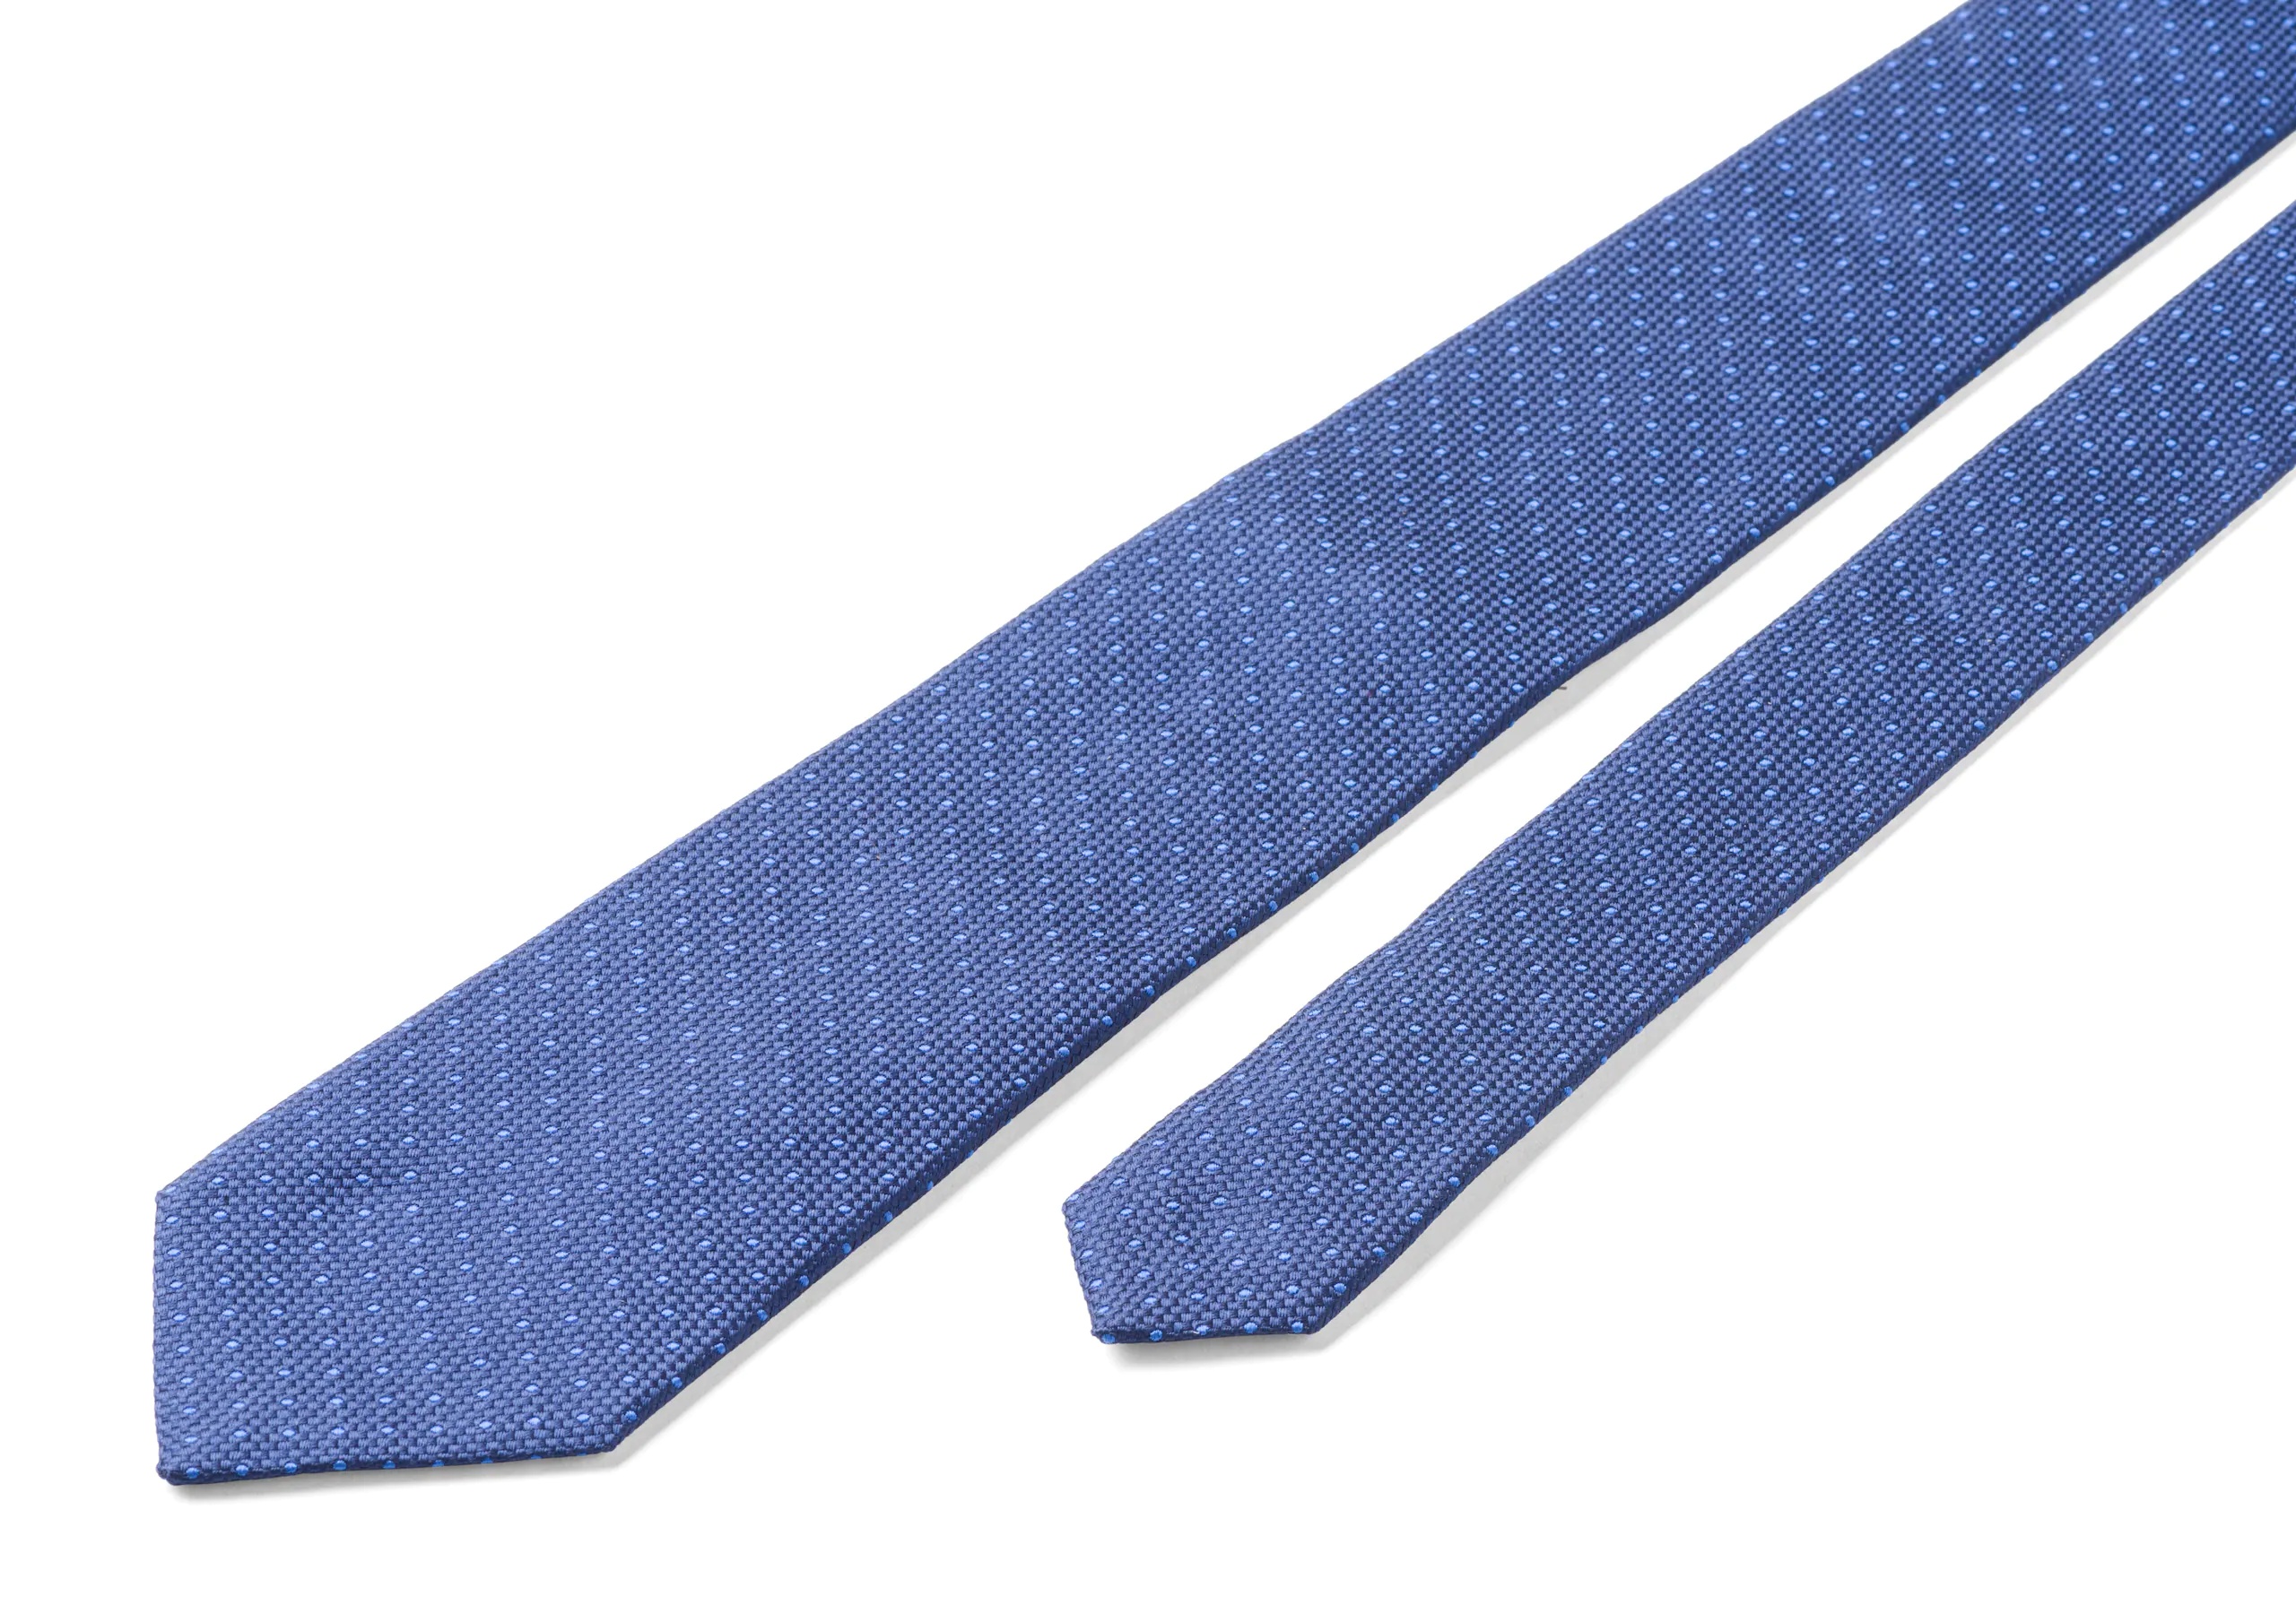 Woven pin dot tie
Silk Weave Navy - 2